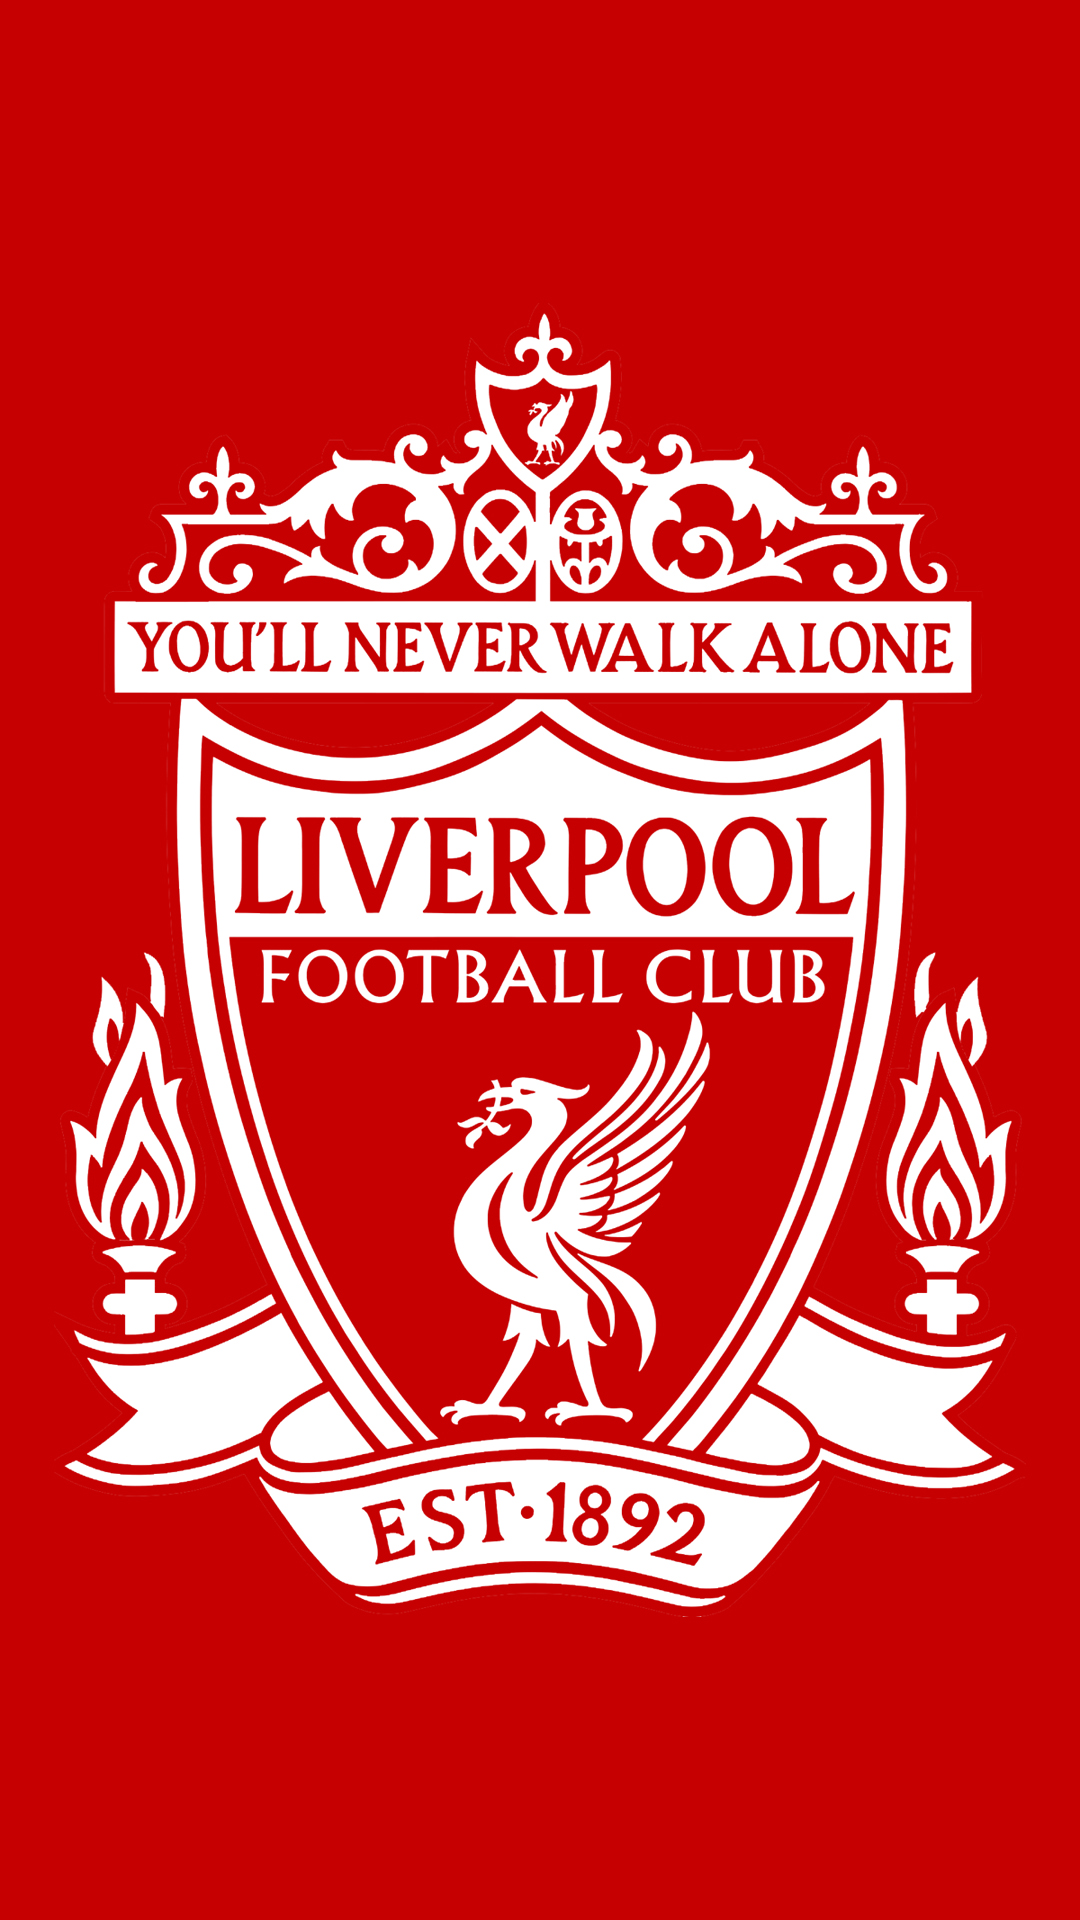 Liverpool FC Mobile Wallpaper LFC Artwork Liverpool FC